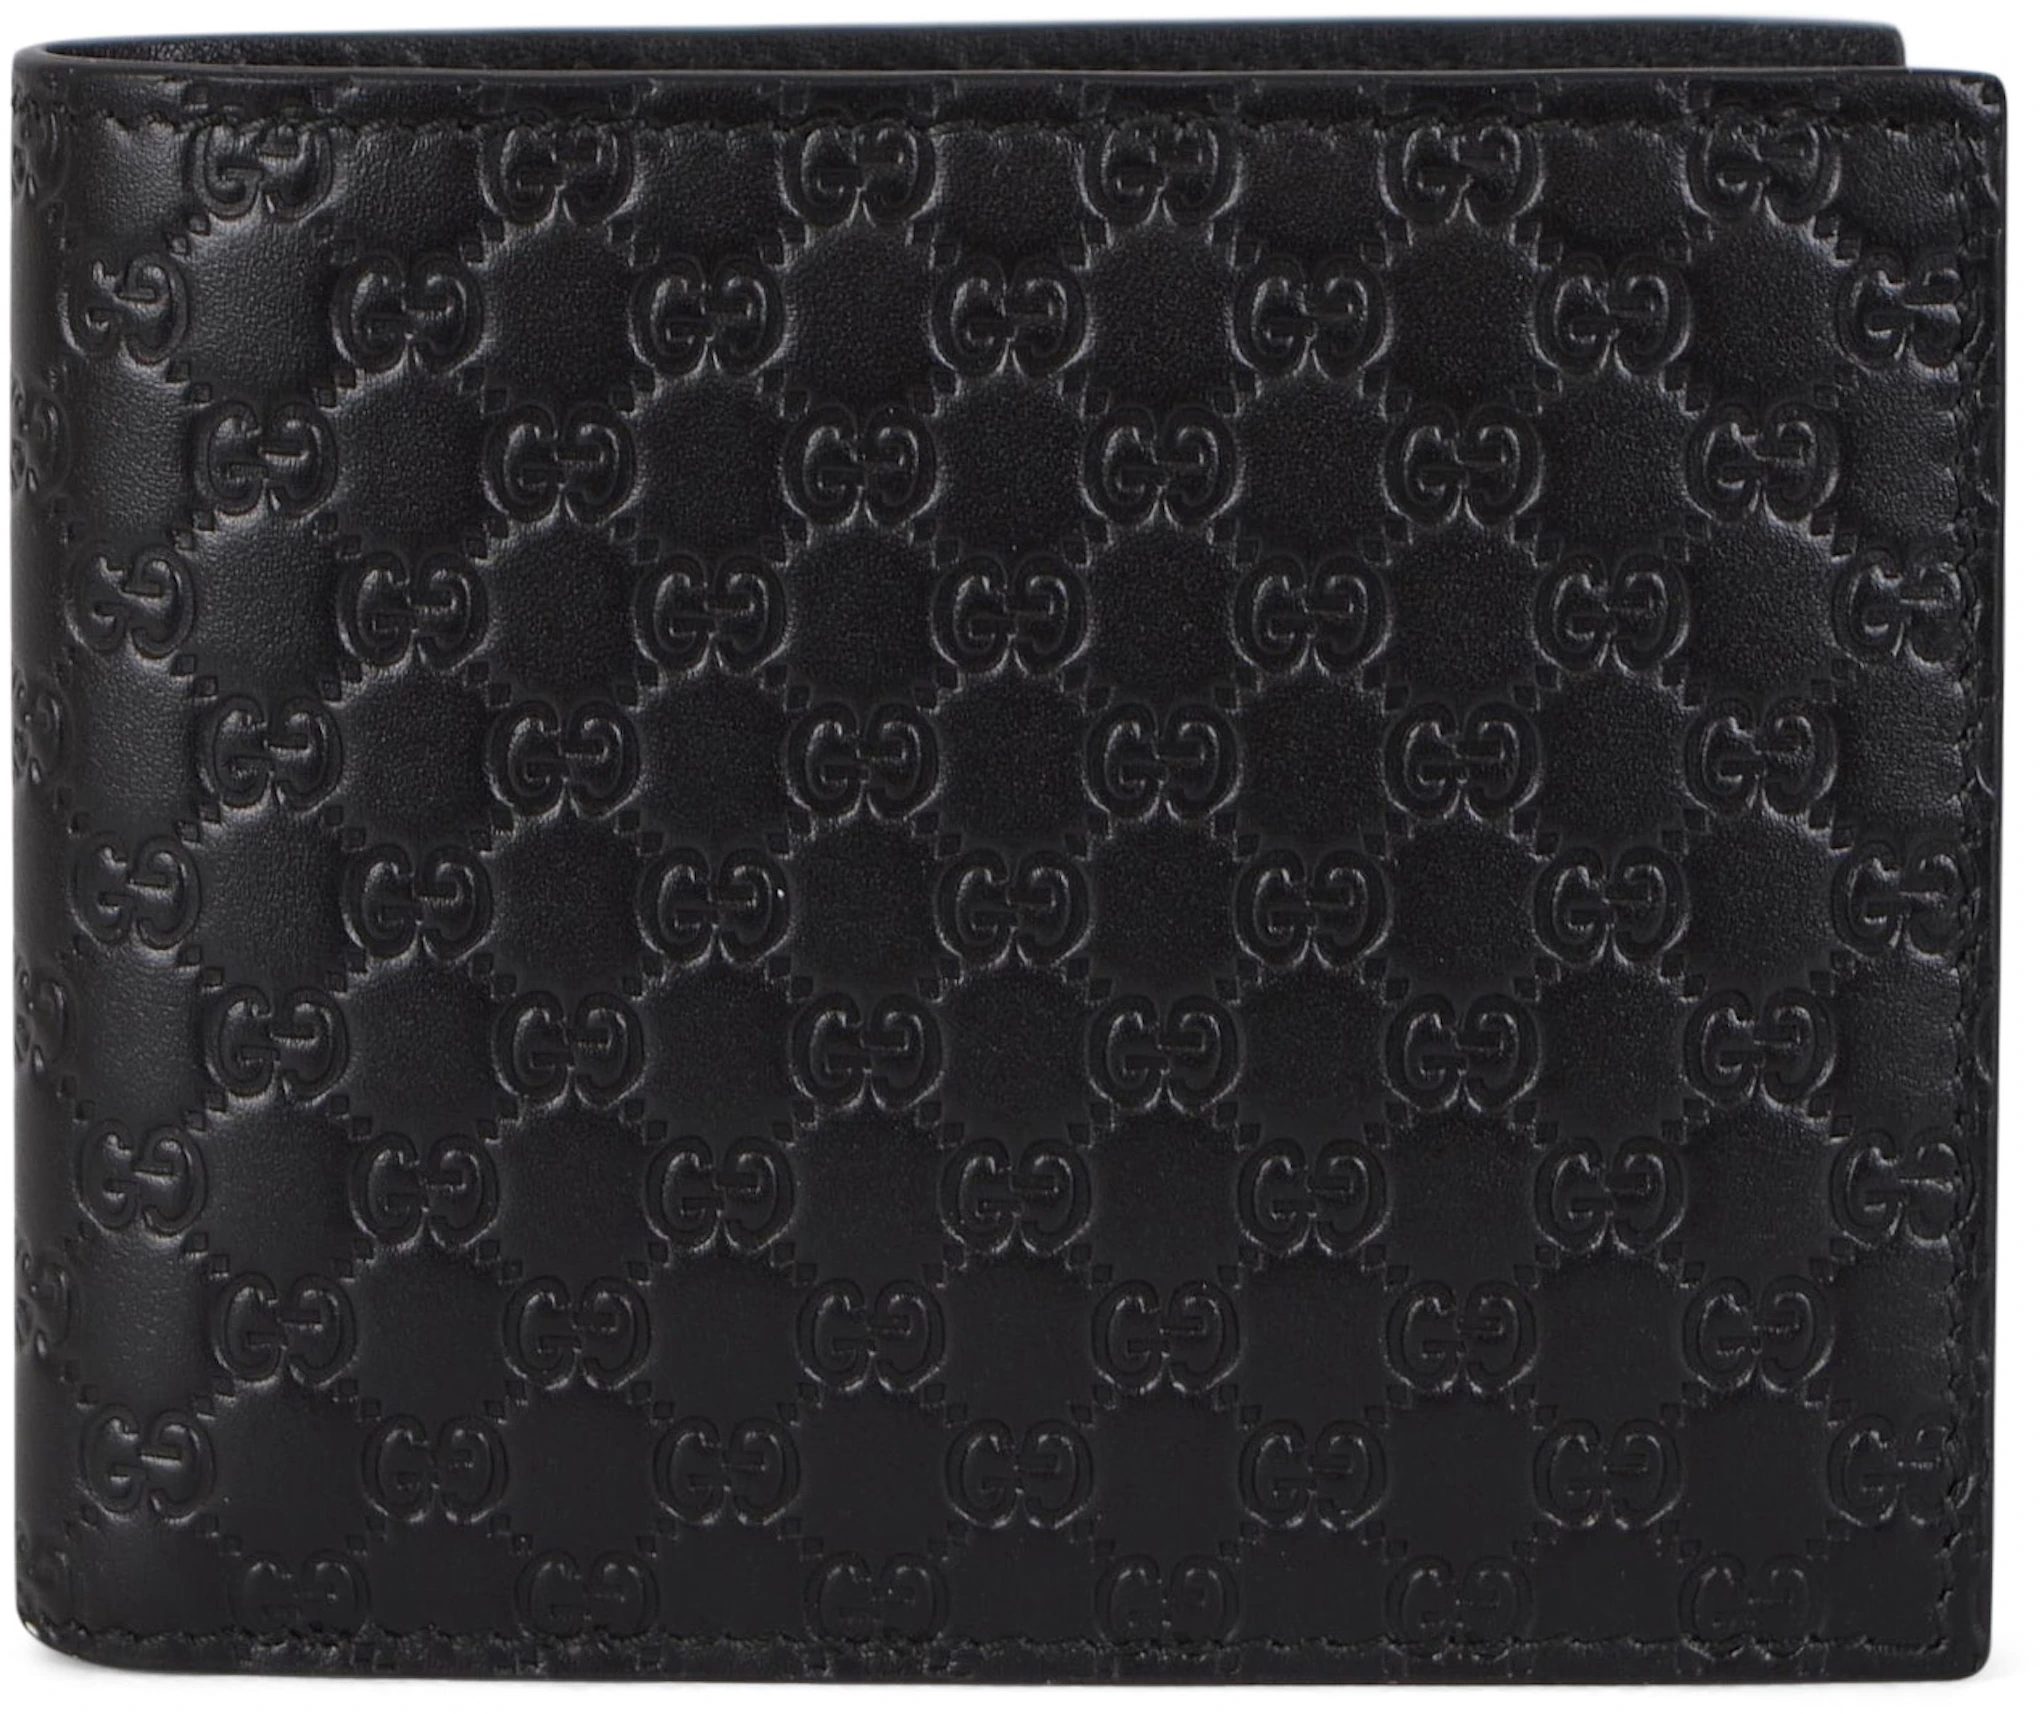 Kloppen Noodlottig Regeren Gucci Bifold Wallet MicroGuccissima Black in Leather - US